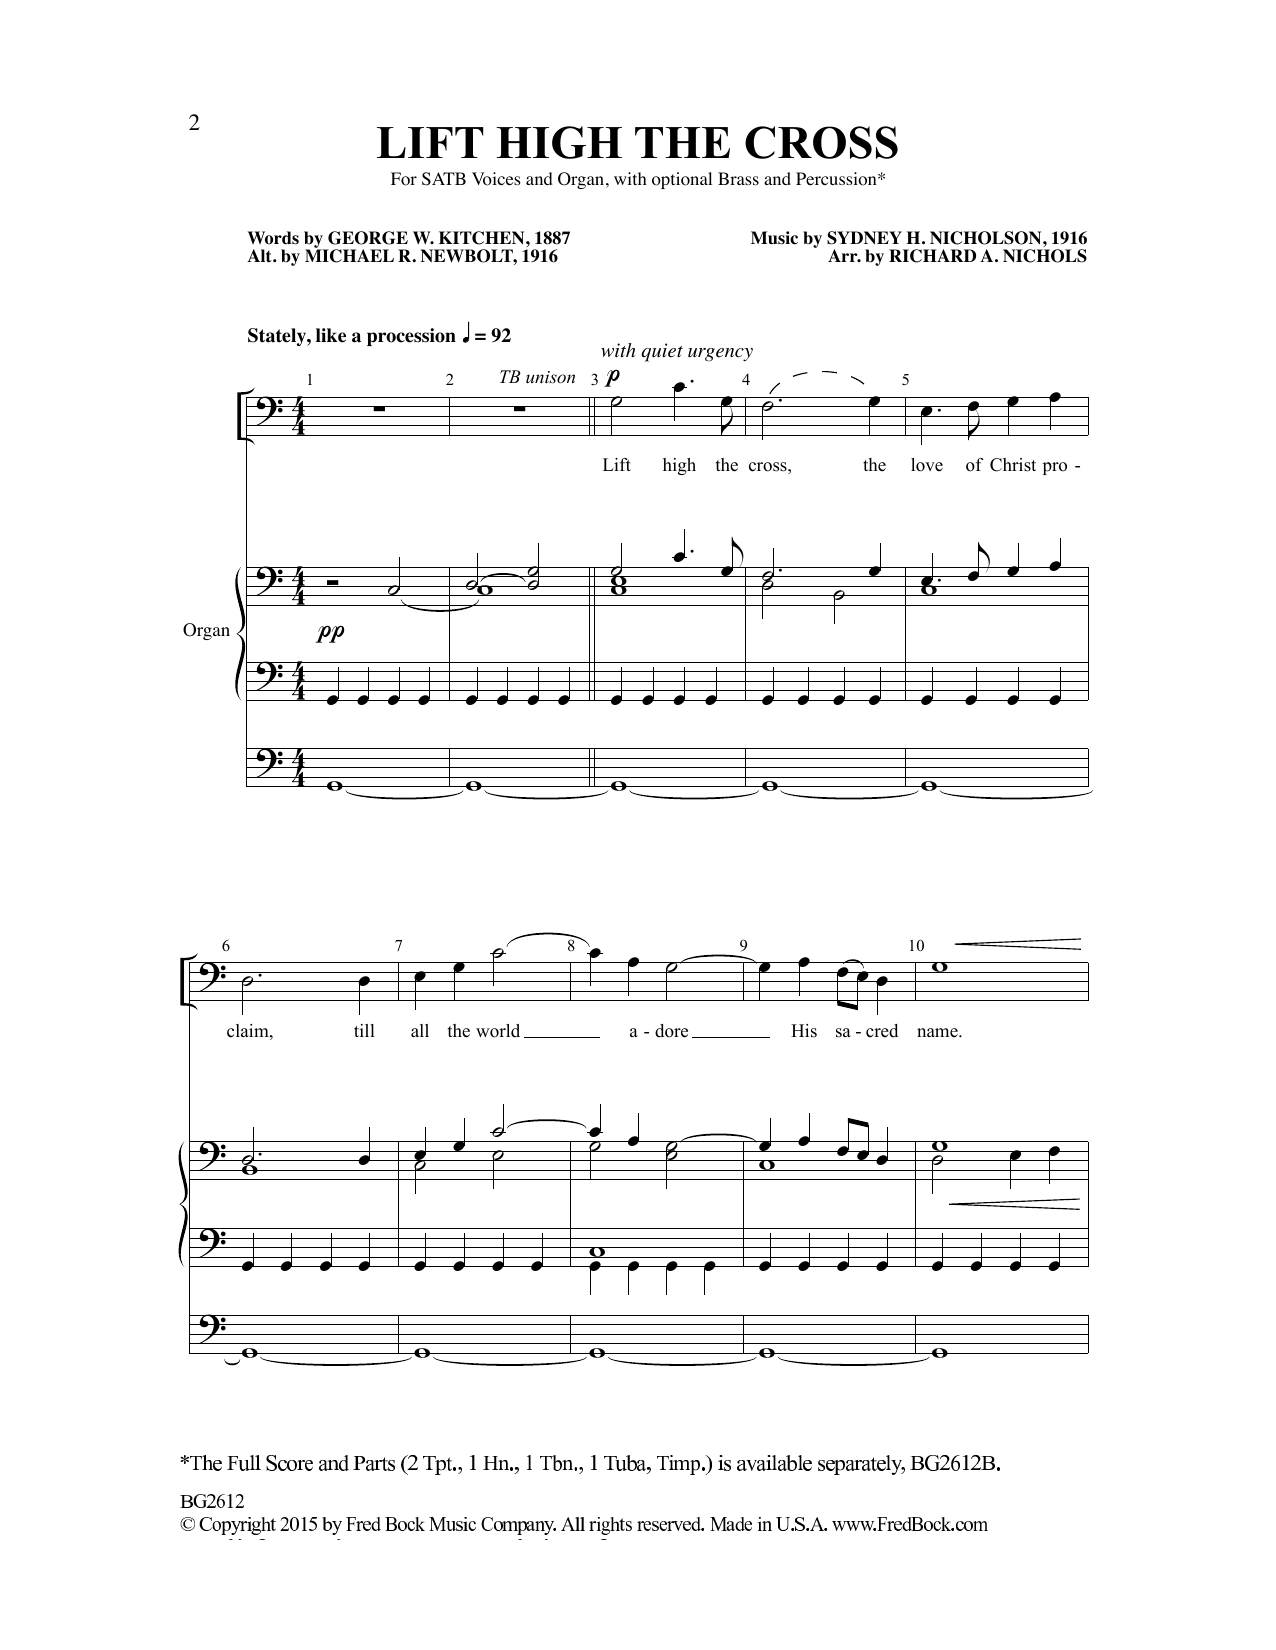 Richard A. Nichols Lift High The Cross Sheet Music Notes & Chords for SATB Choir - Download or Print PDF